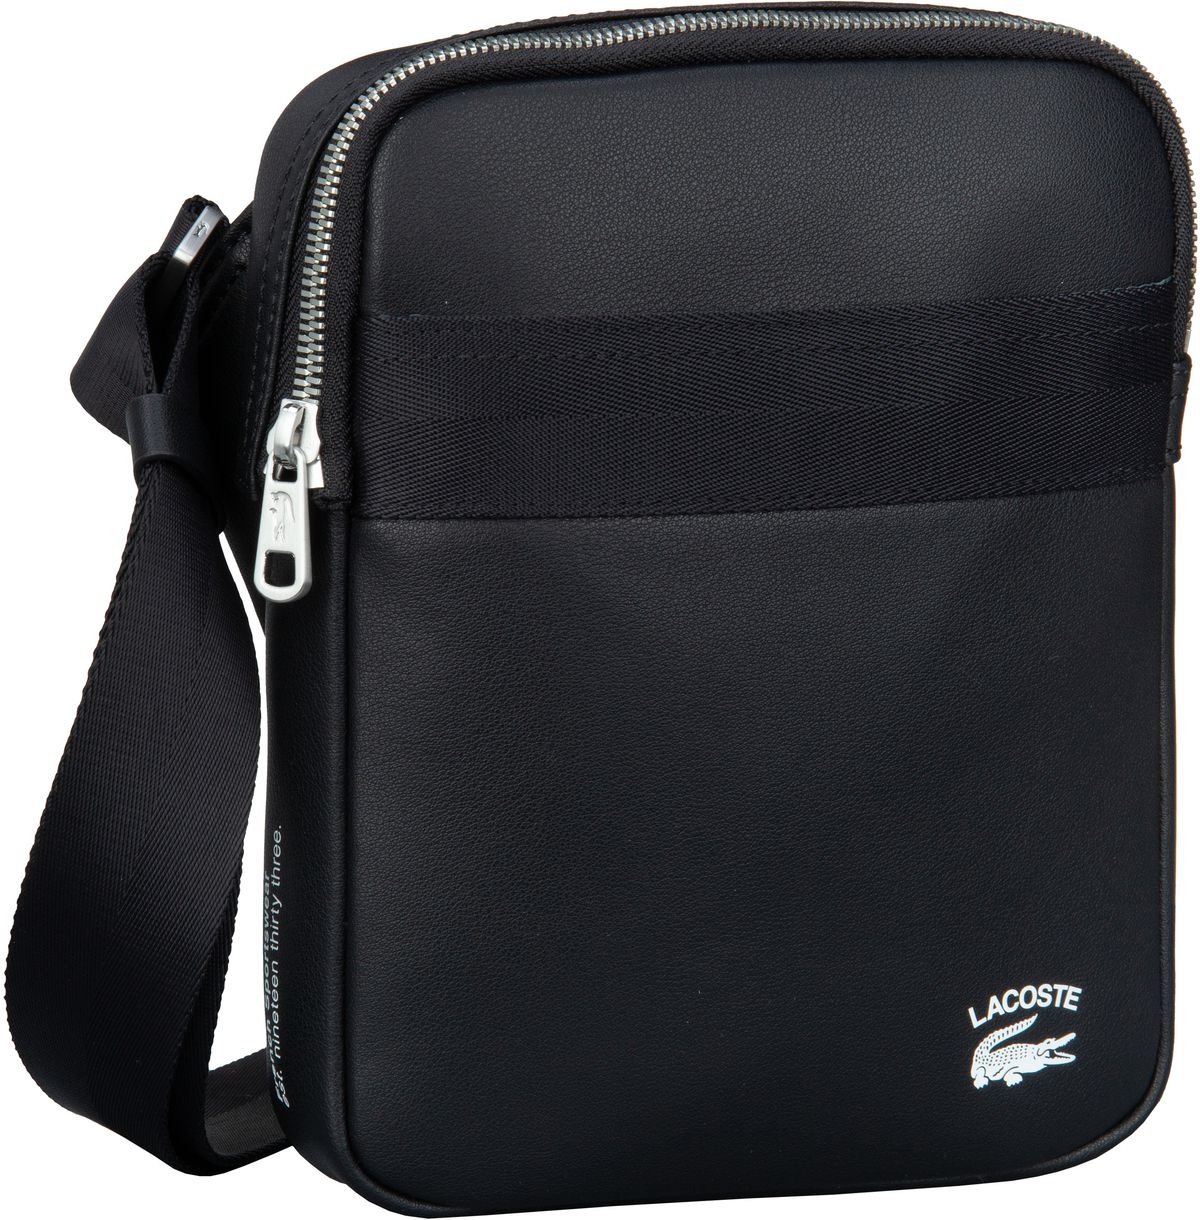 Lacoste Practice Camera Bag S 4017 - Black